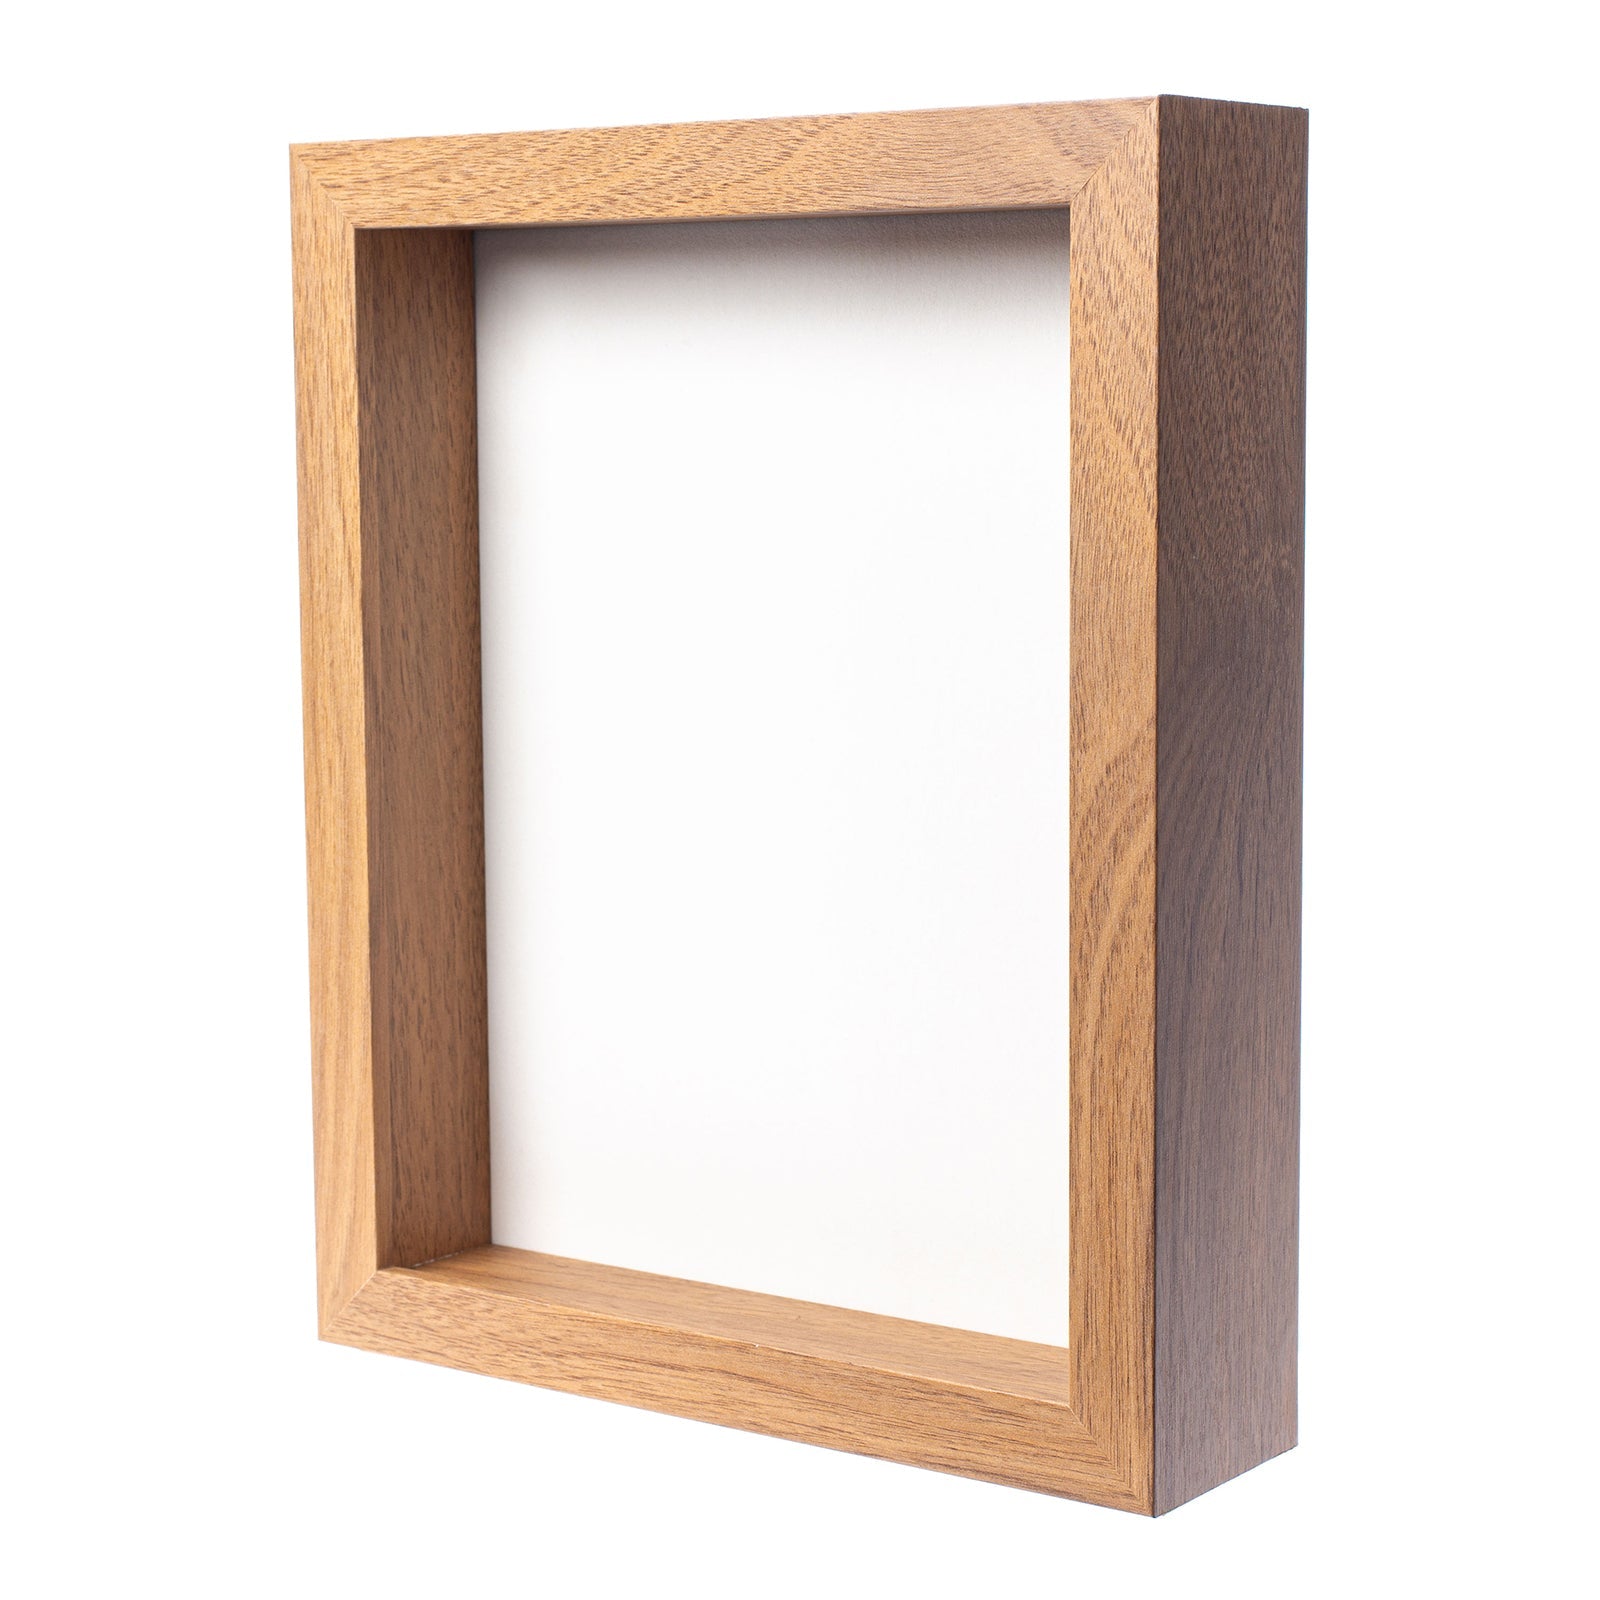 8.5” x 11” Light Oak Wood Shadow Box Frame